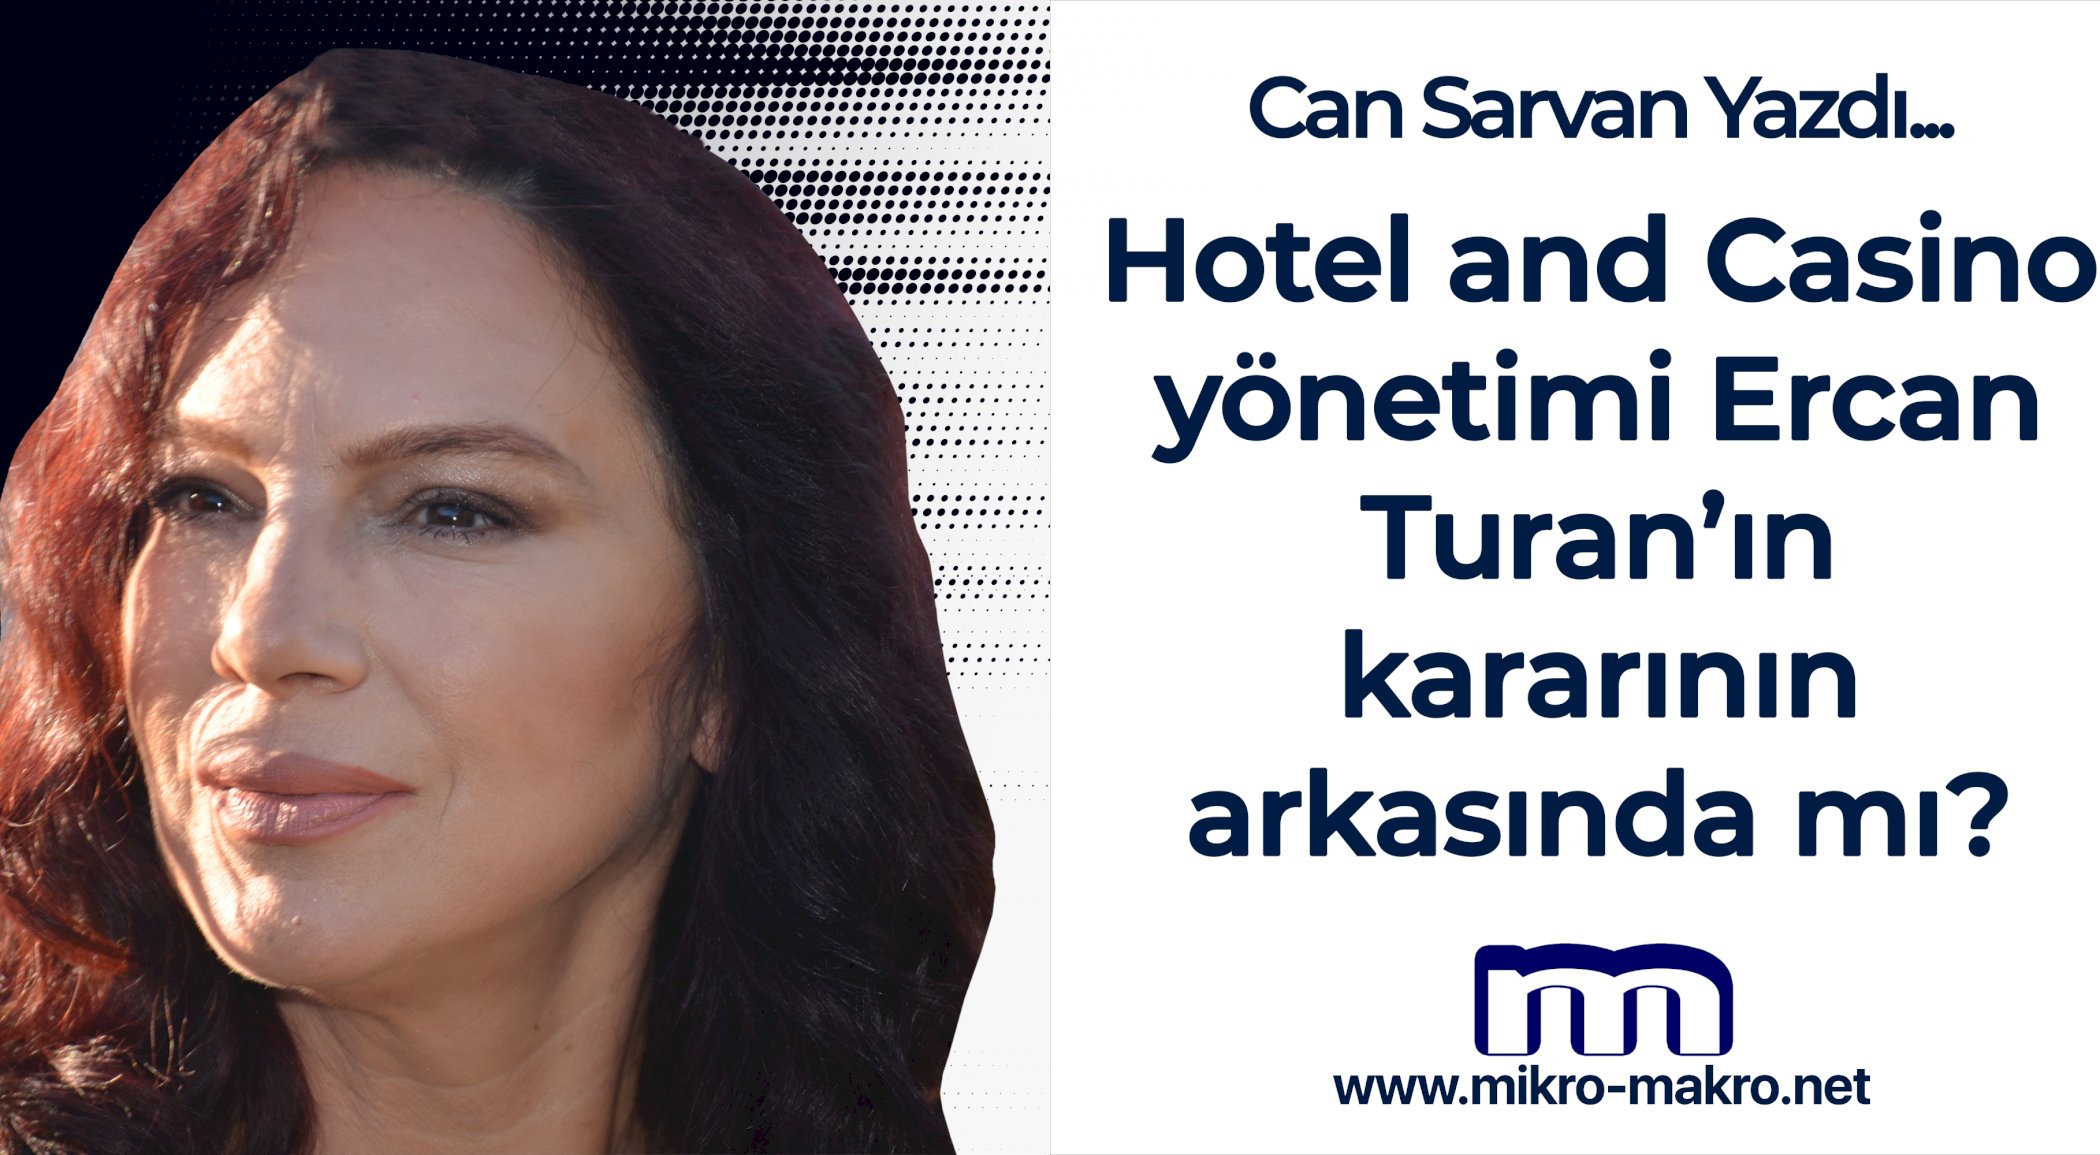 https://mail.mikro-makro.net/hotel-and-casino-yonetimi-ercan-turanin-kararinin-arkasinda-mi